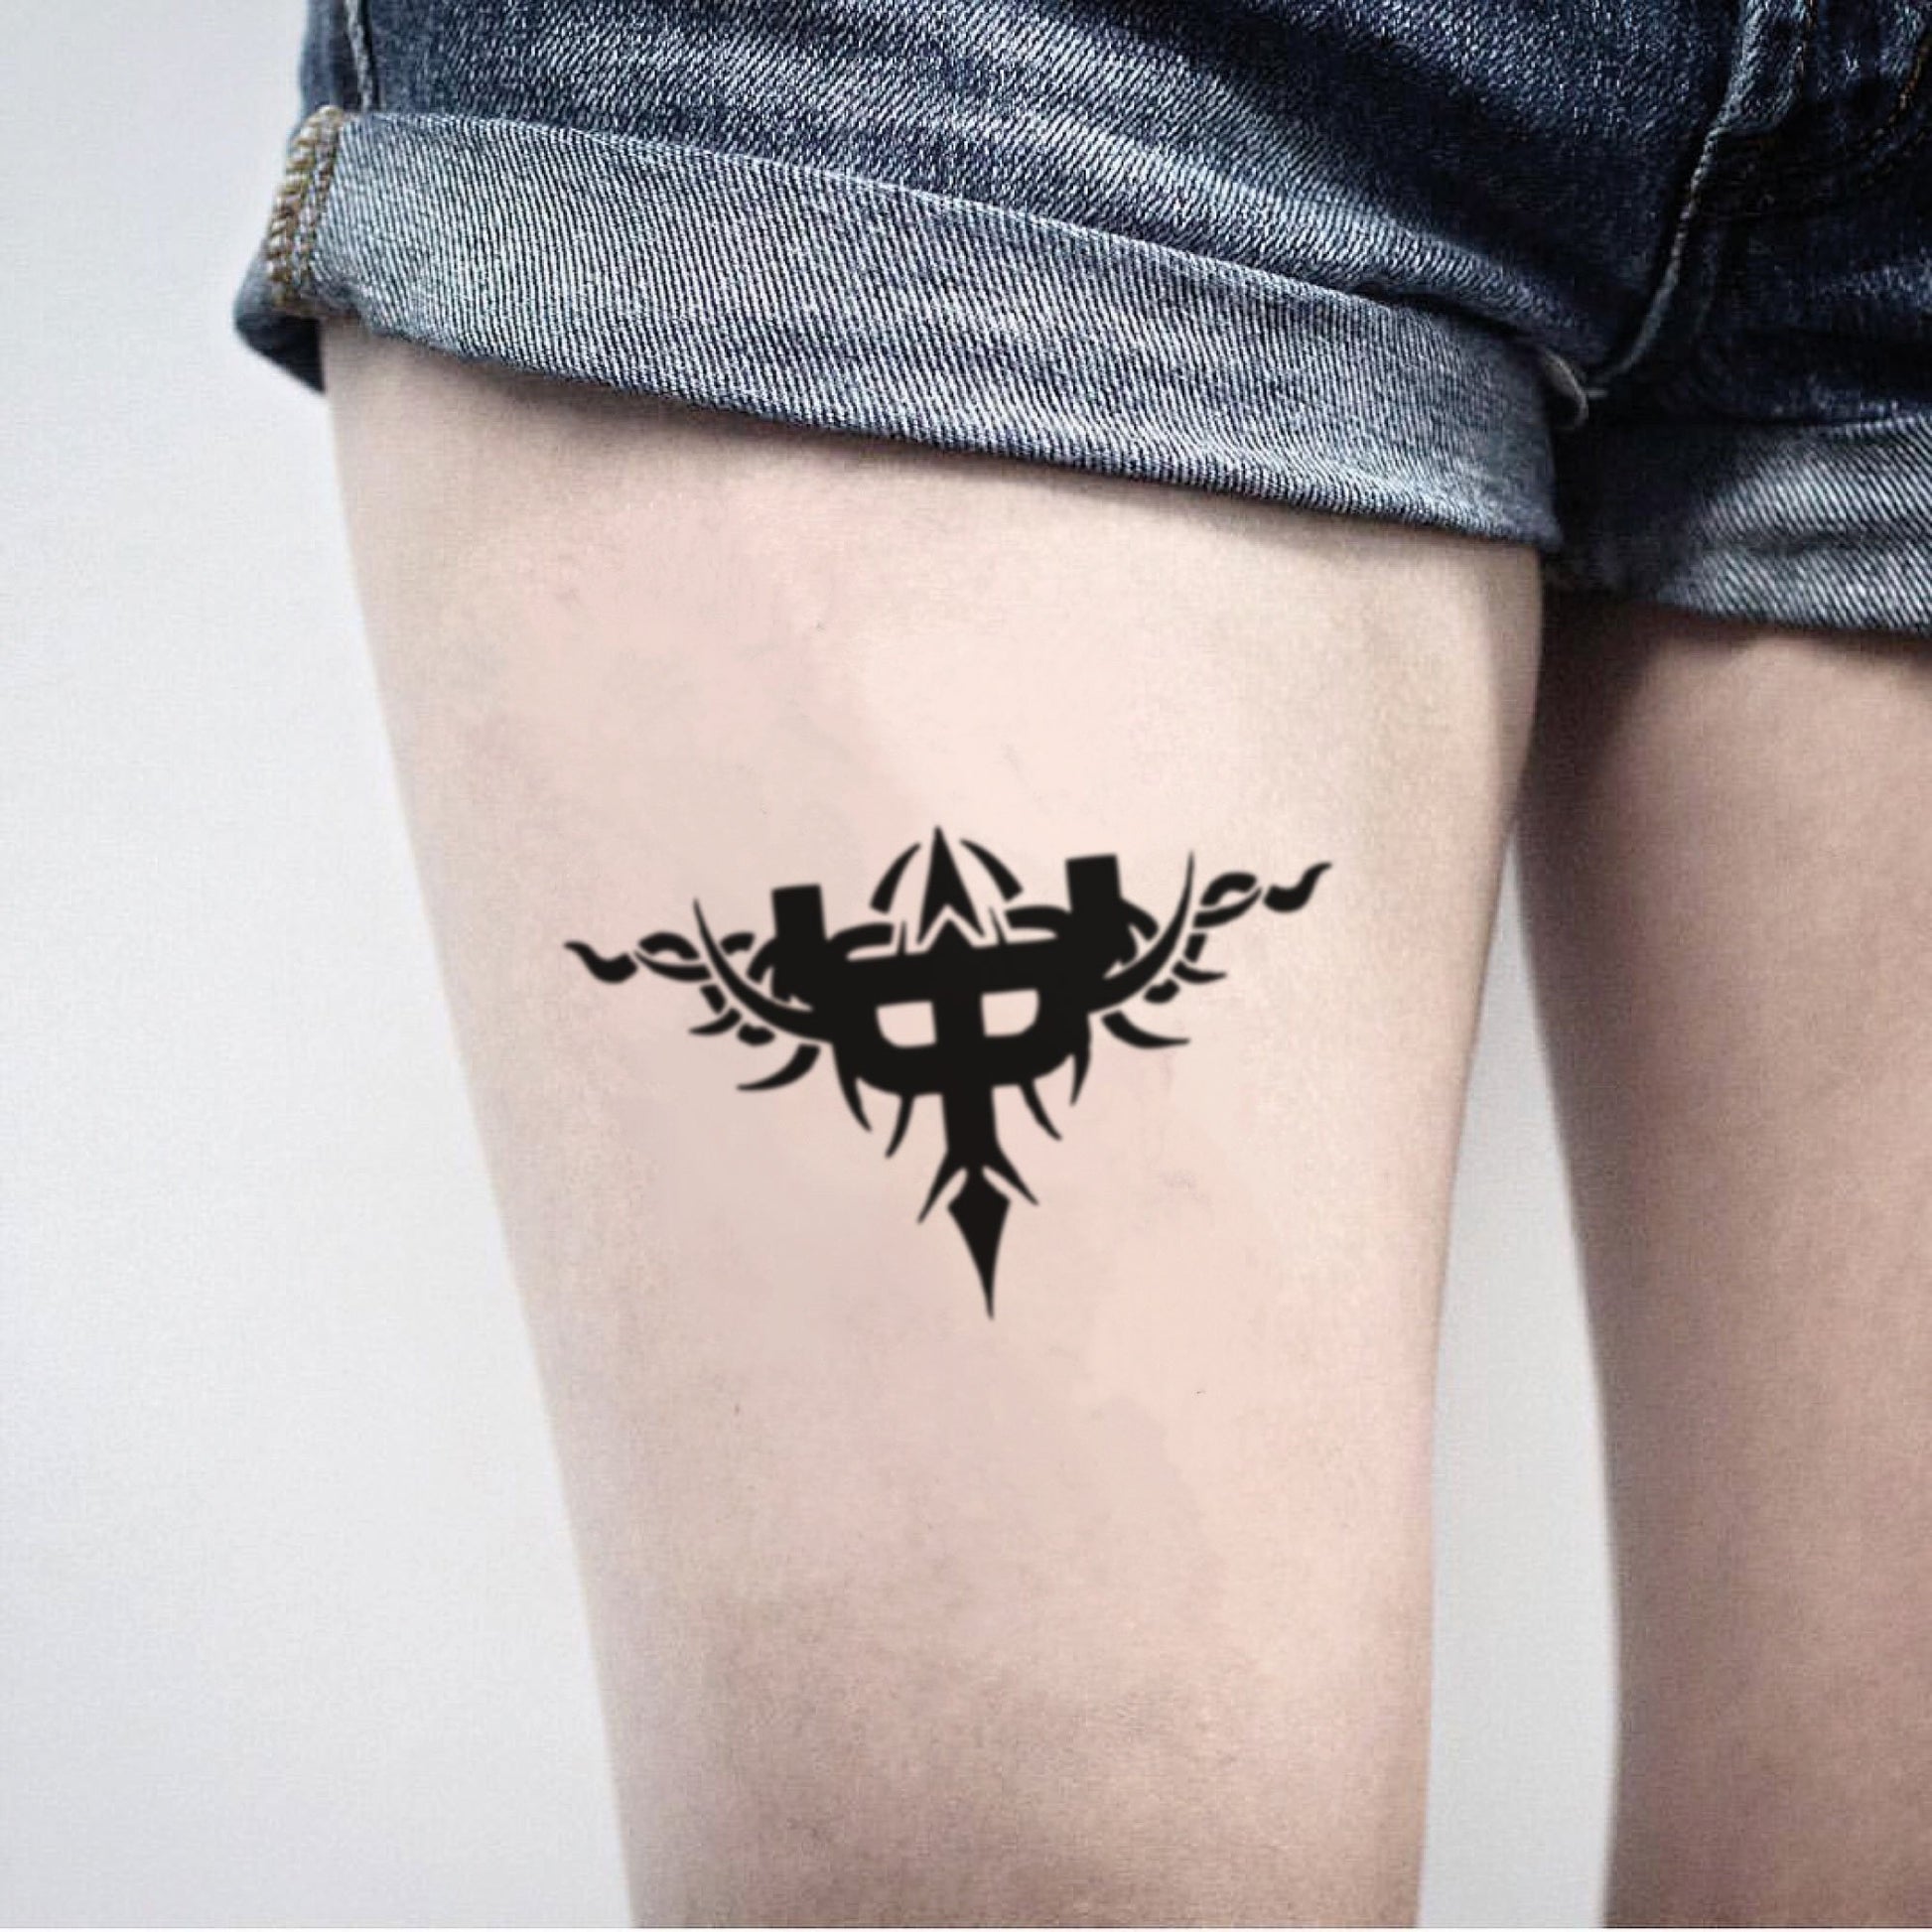 fake medium judas priest minimalist temporary tattoo sticker design idea on thigh